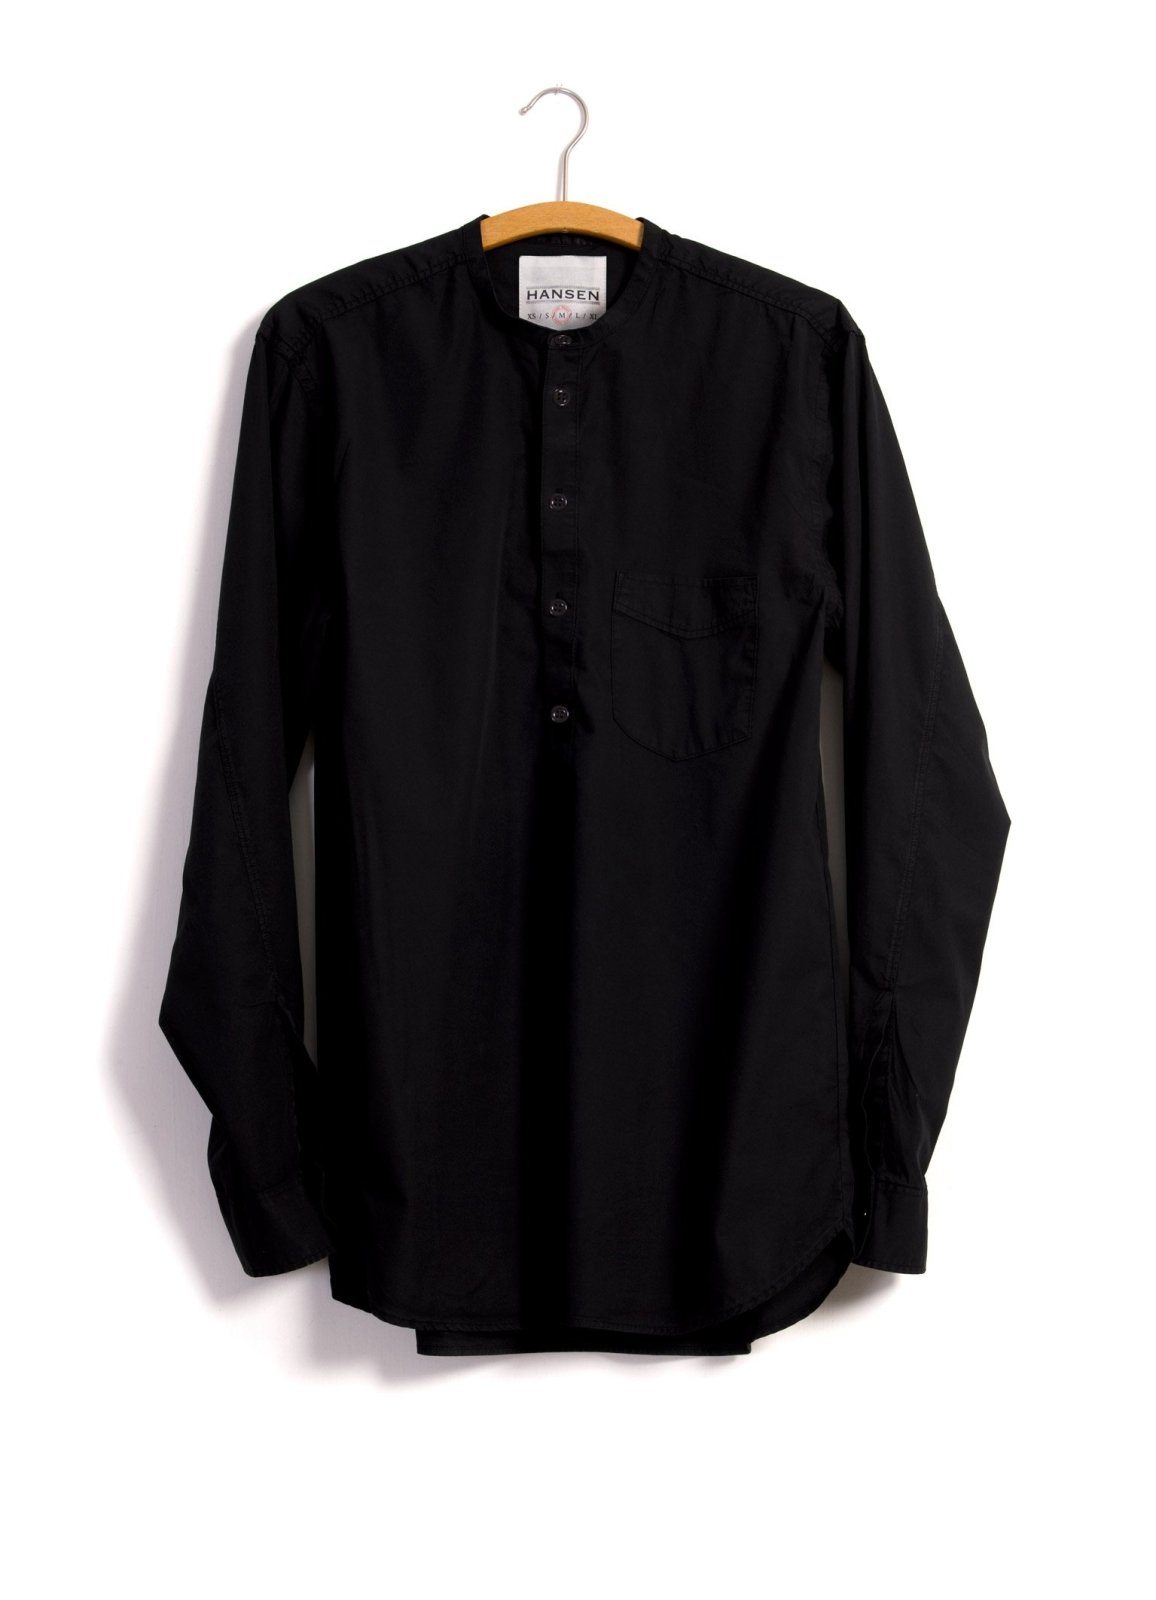 ARTHUR | Collarless Pull-on Shirt | Black | €150 -HANSEN Garments- HANSEN Garments